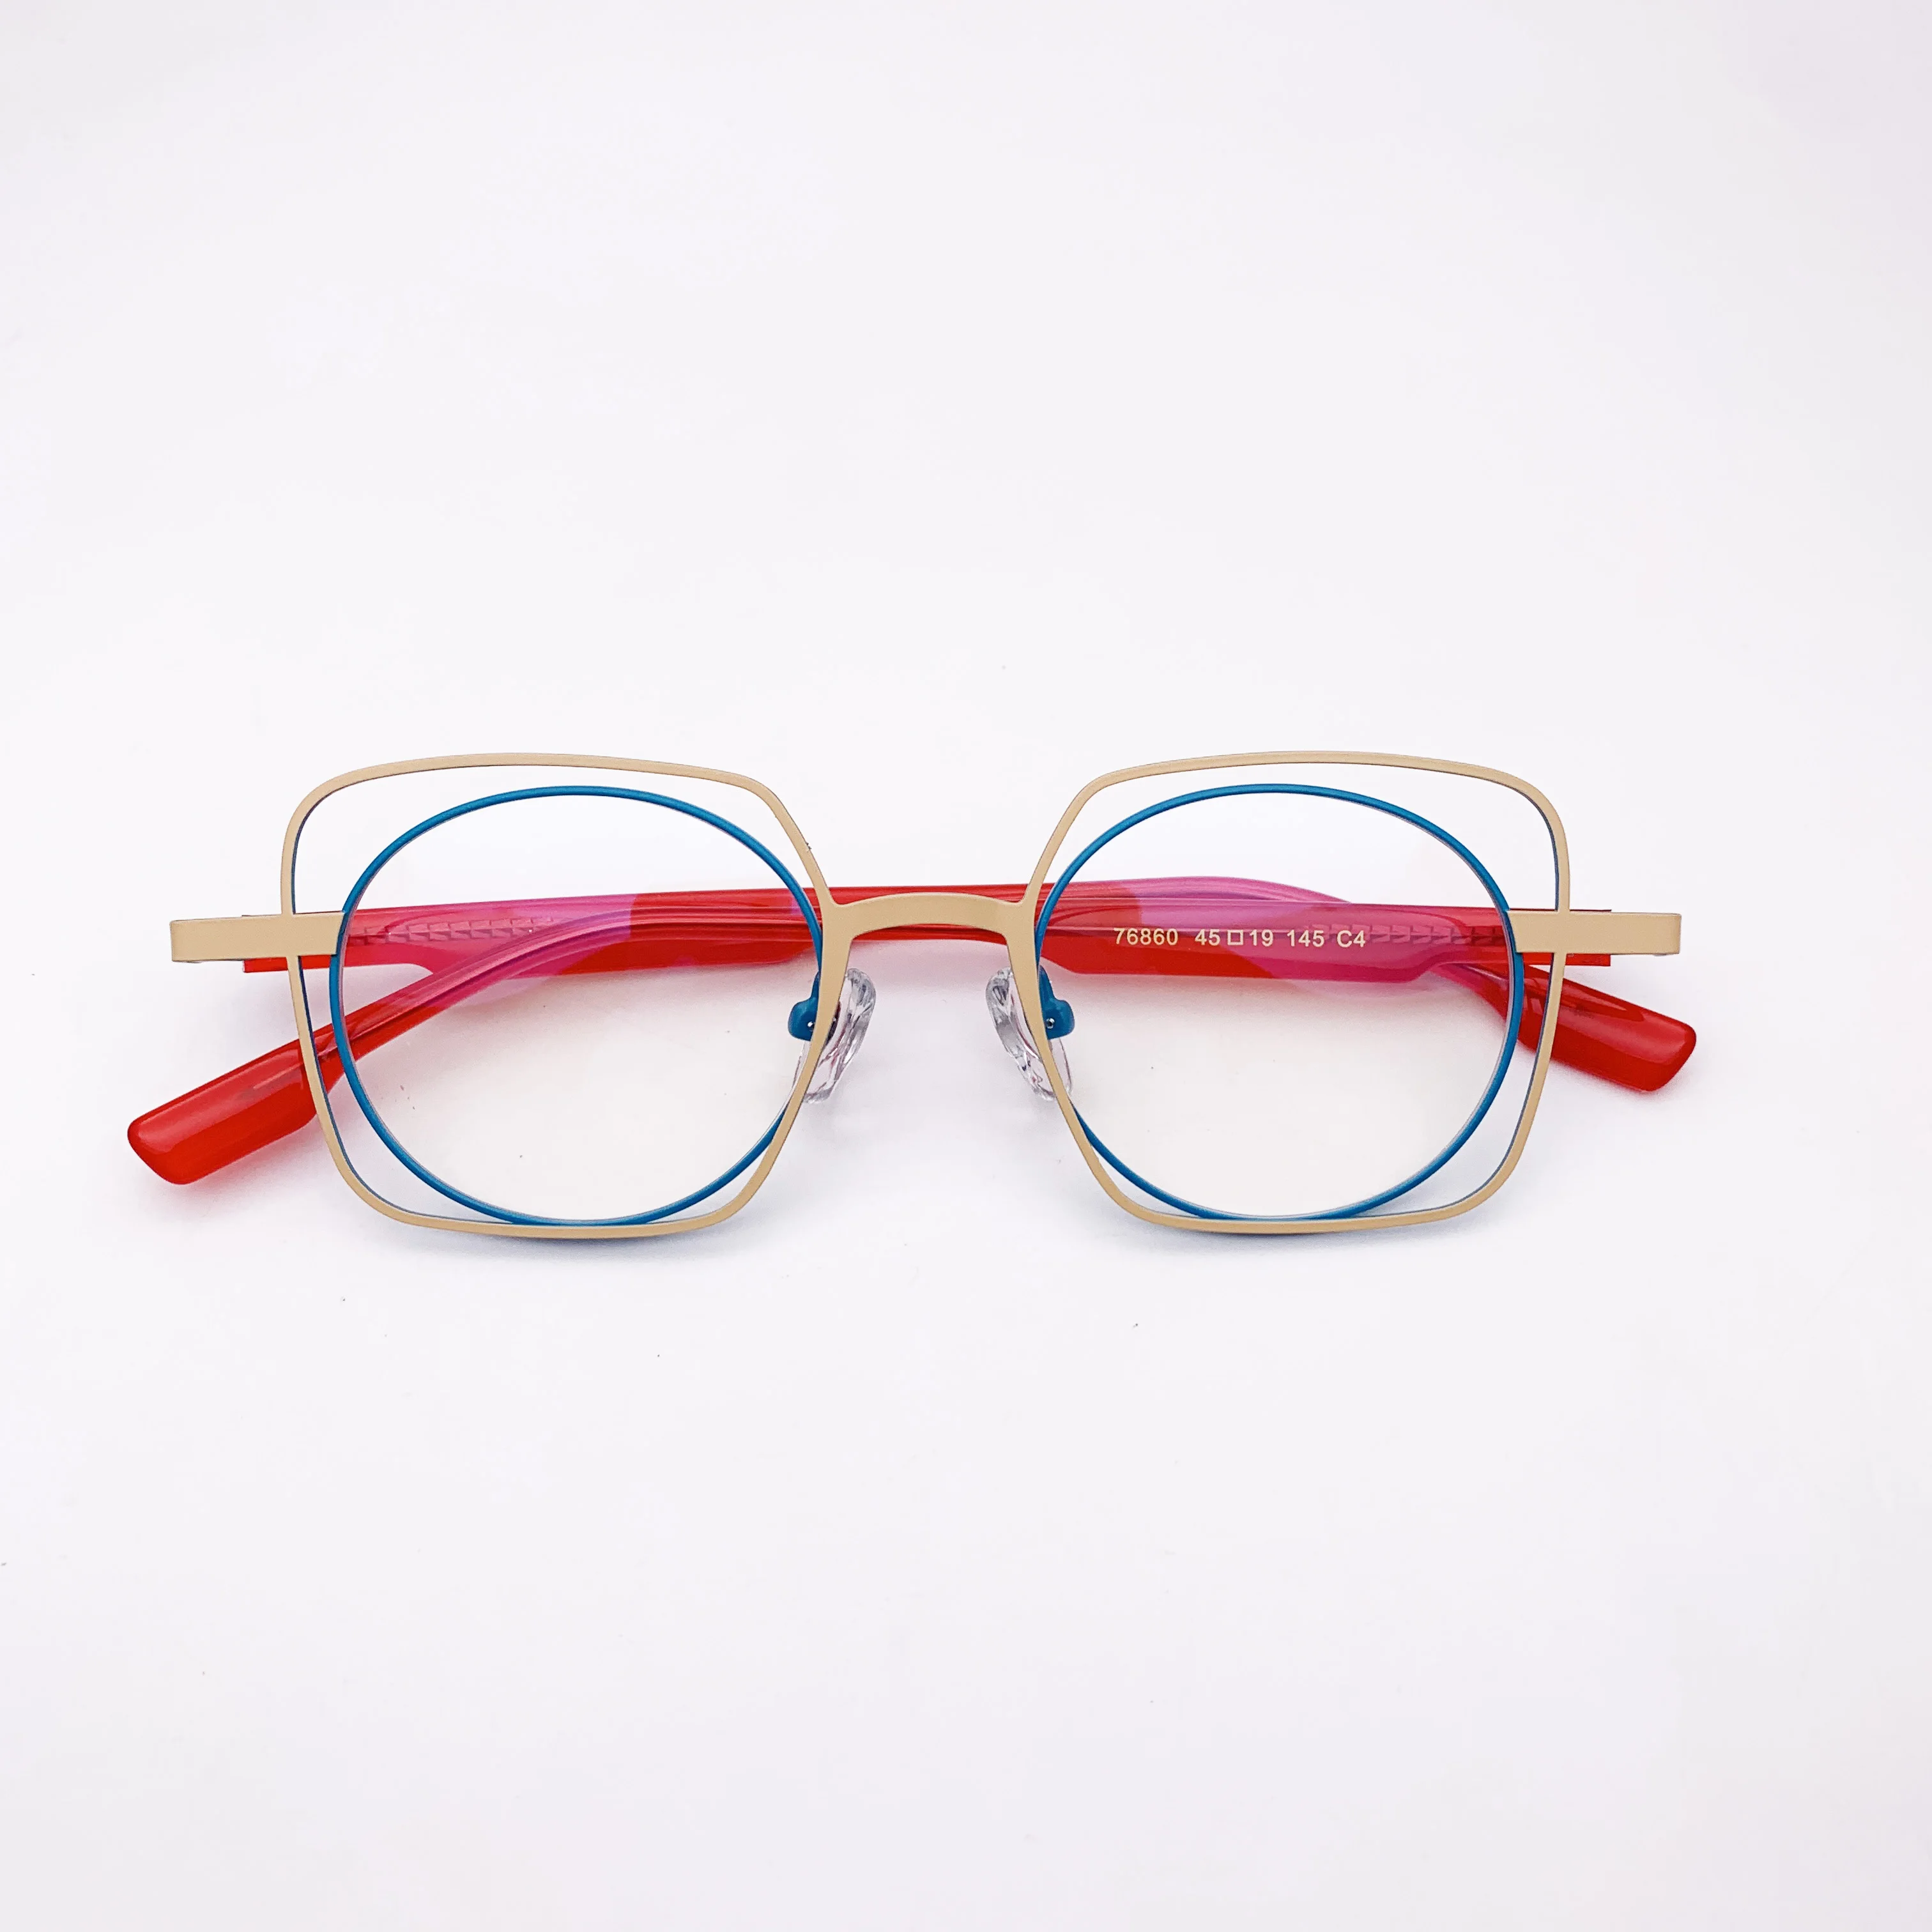 Belight Optical Pure Titanium Combine Color Full Rim Vintage Retro Glasses Prescription Lens Eyeglasses Frame Eyewear 76860